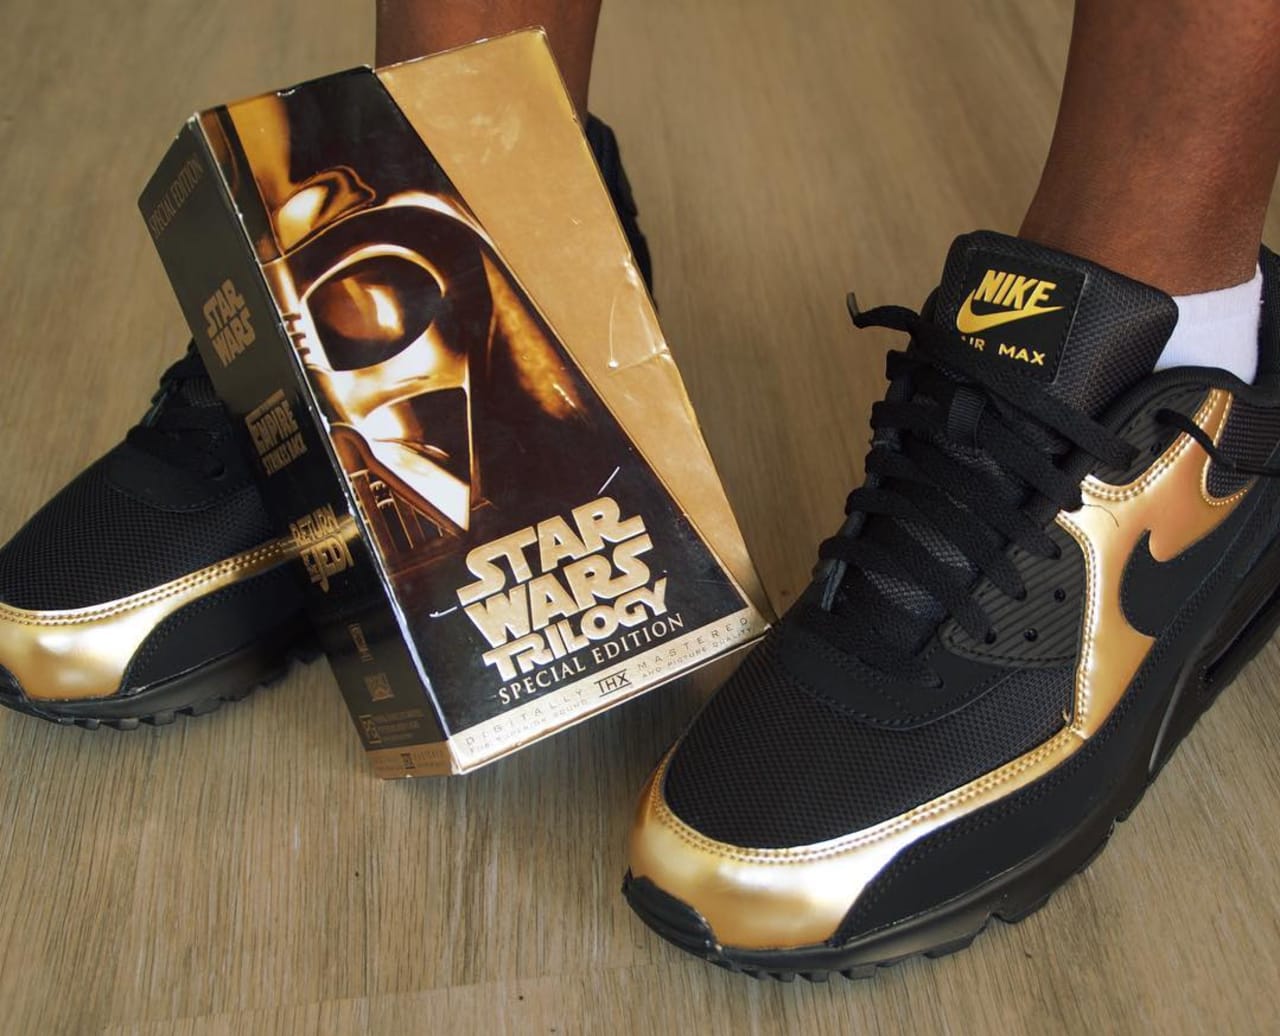 star wars shoes nike